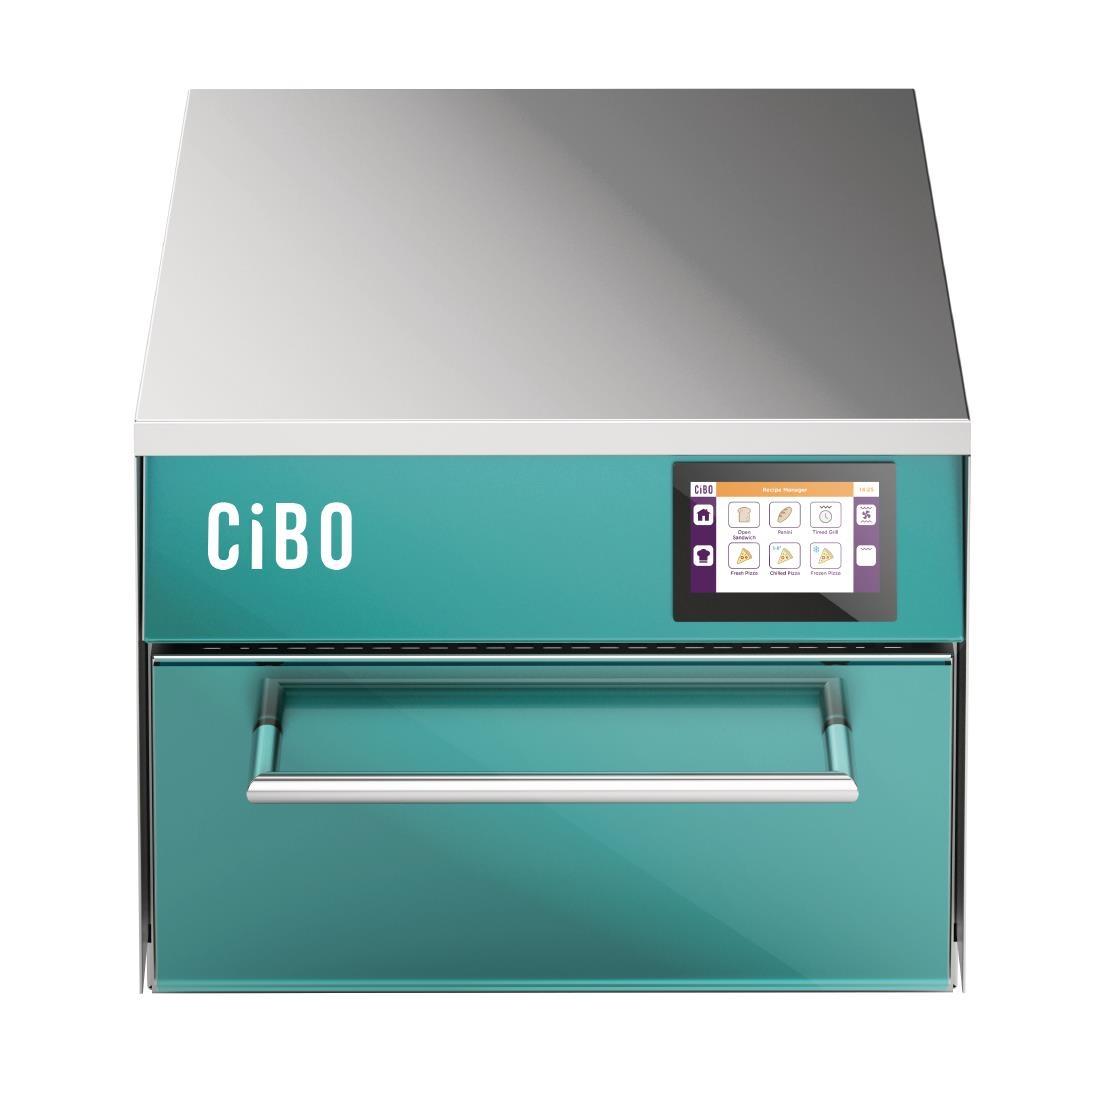 Lincat Cibo High Speed Oven Teal - CY512  - 4